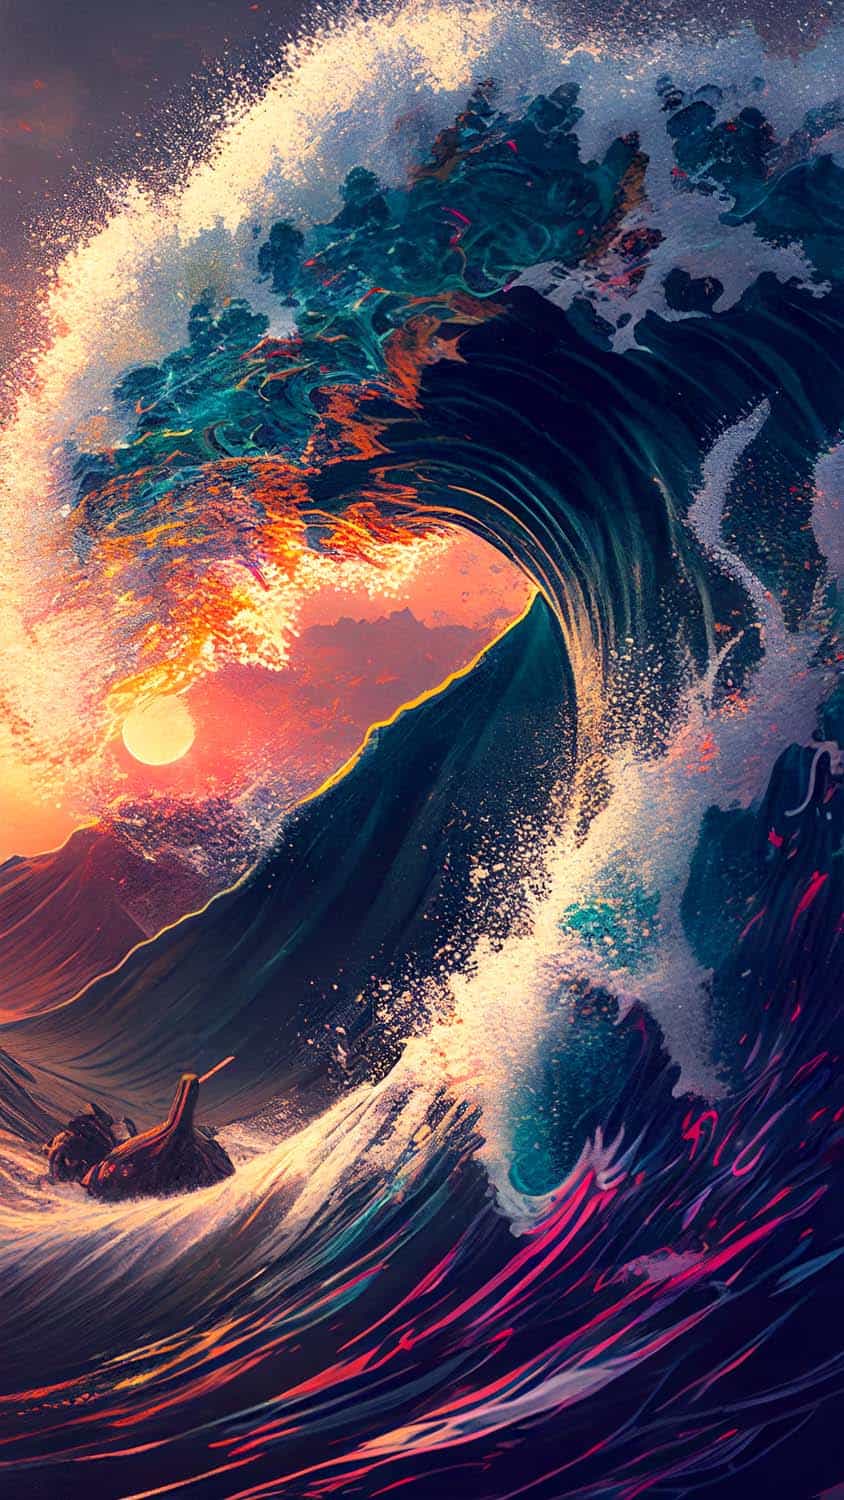 23 Ocean Waves iPhone Wallpapers  Wallpaperboat